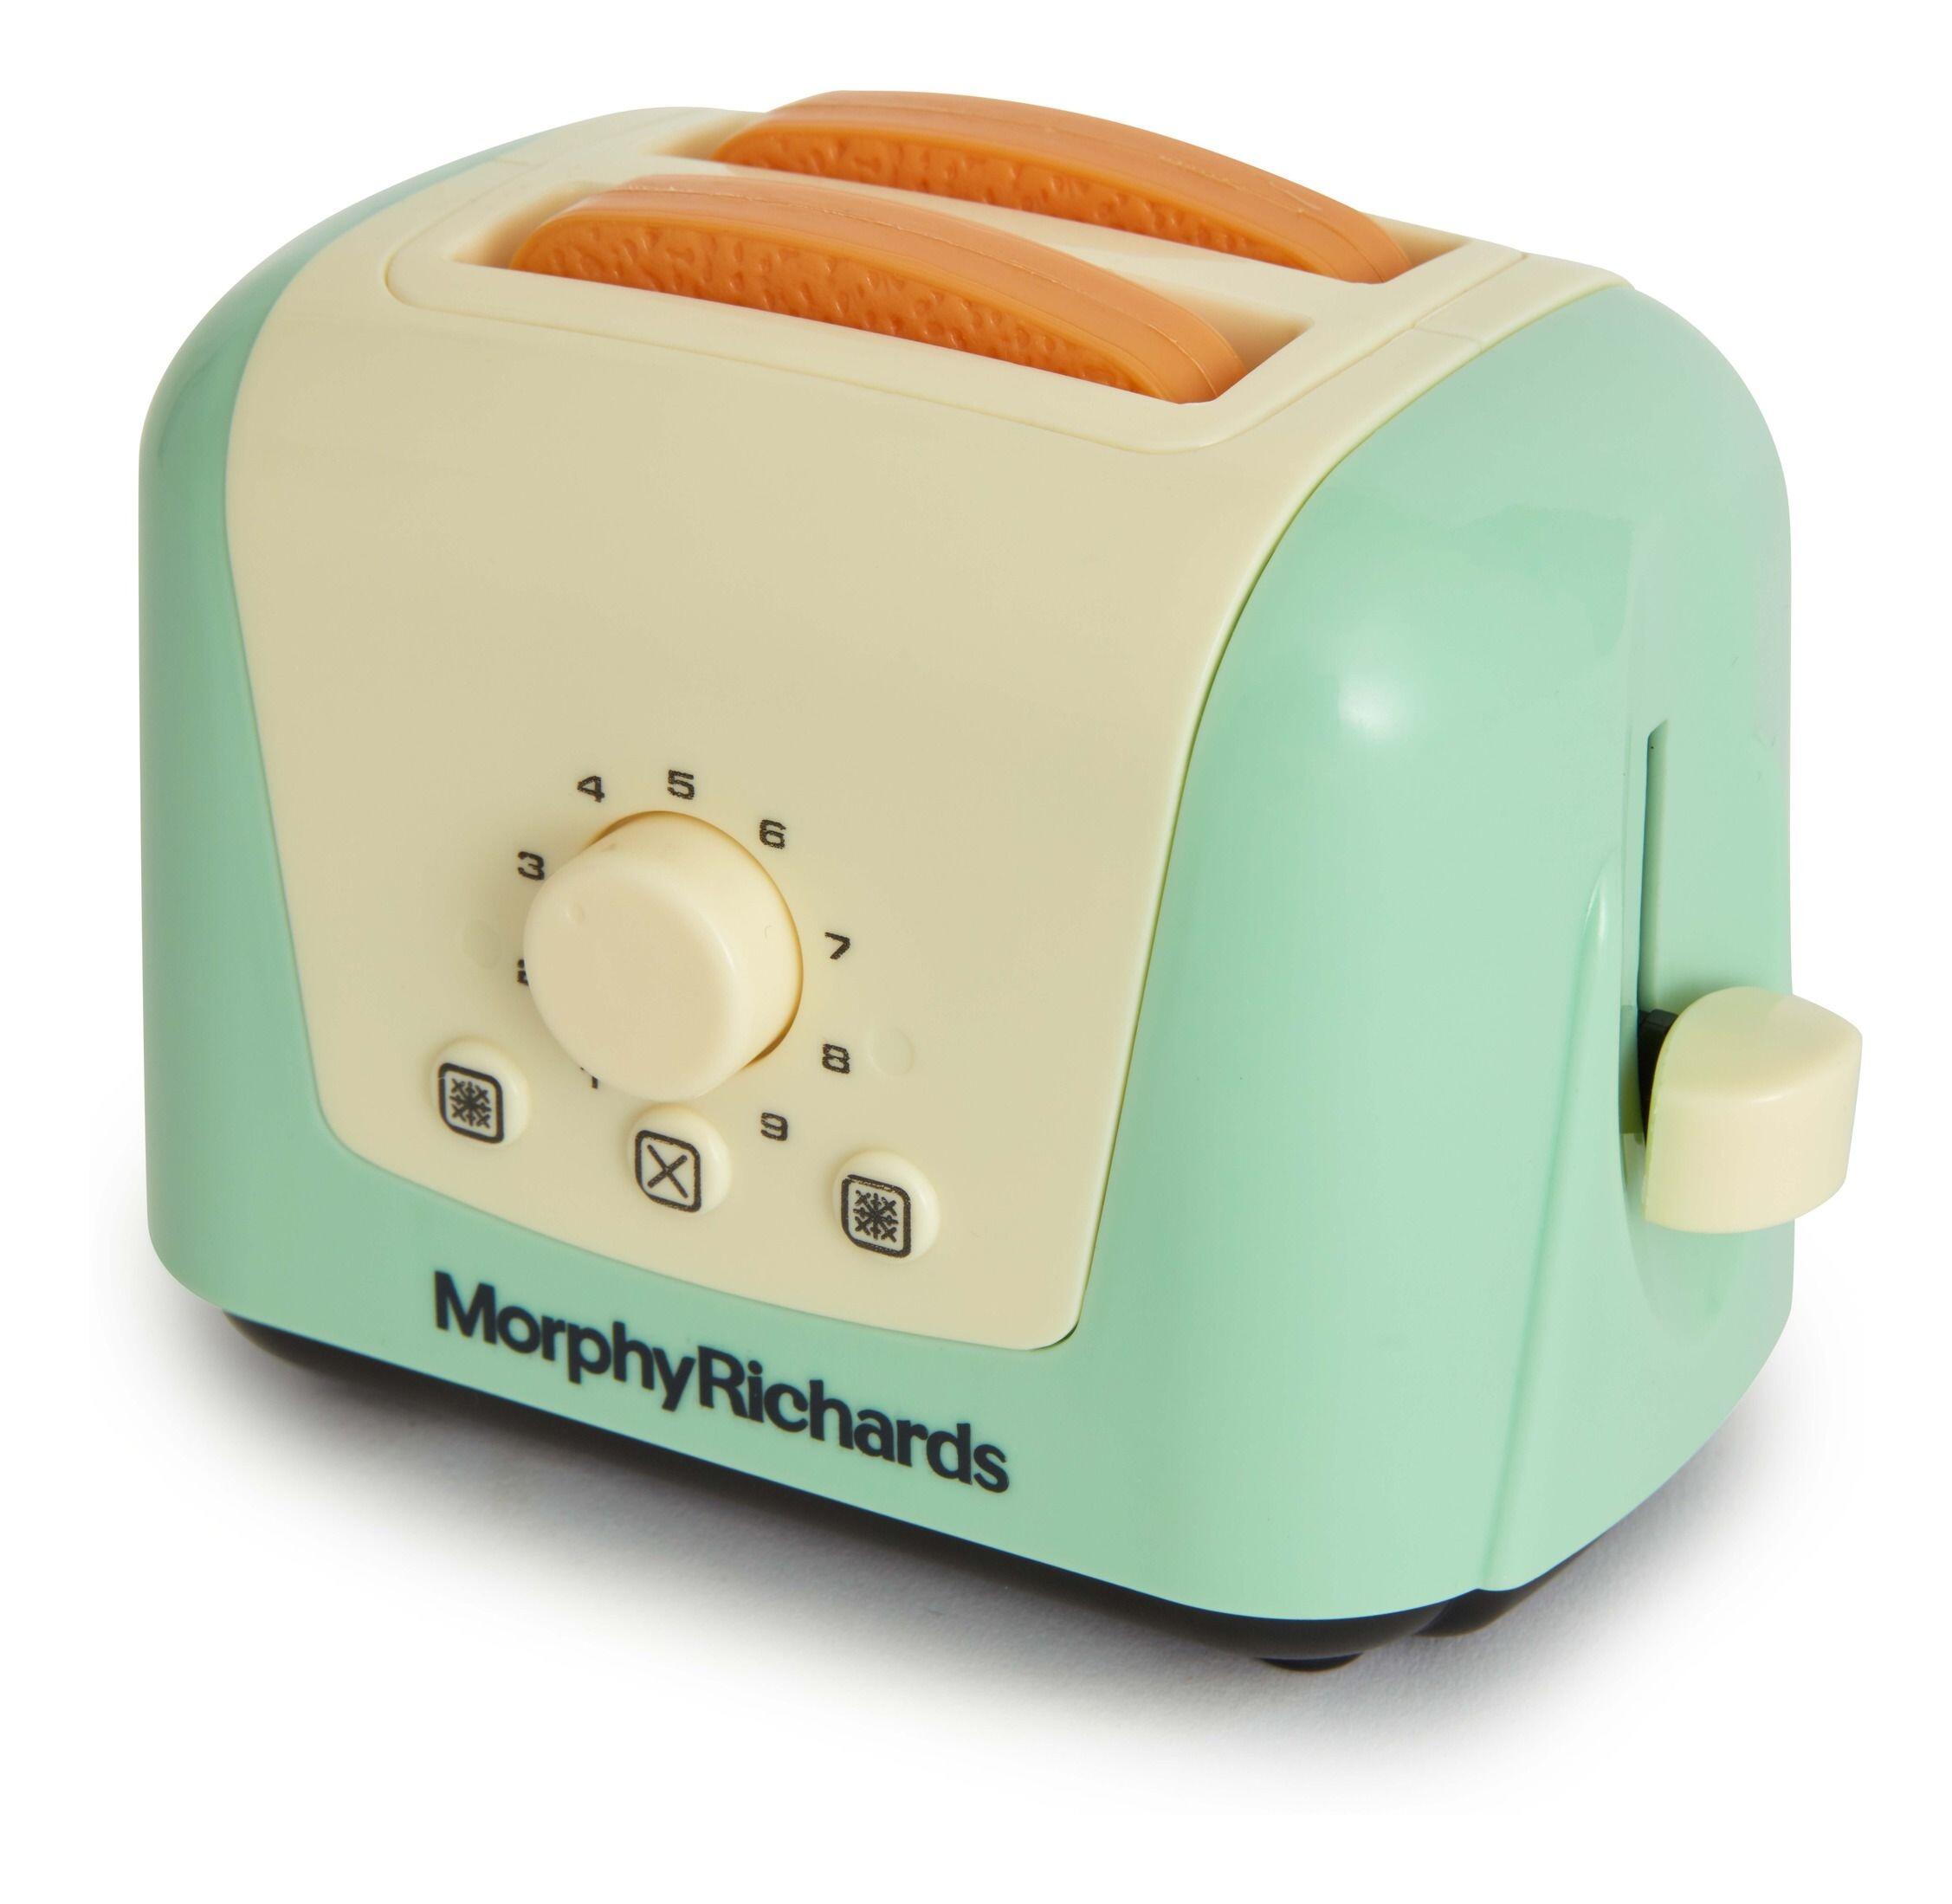 Morphy Richards Children's Toaster Playset